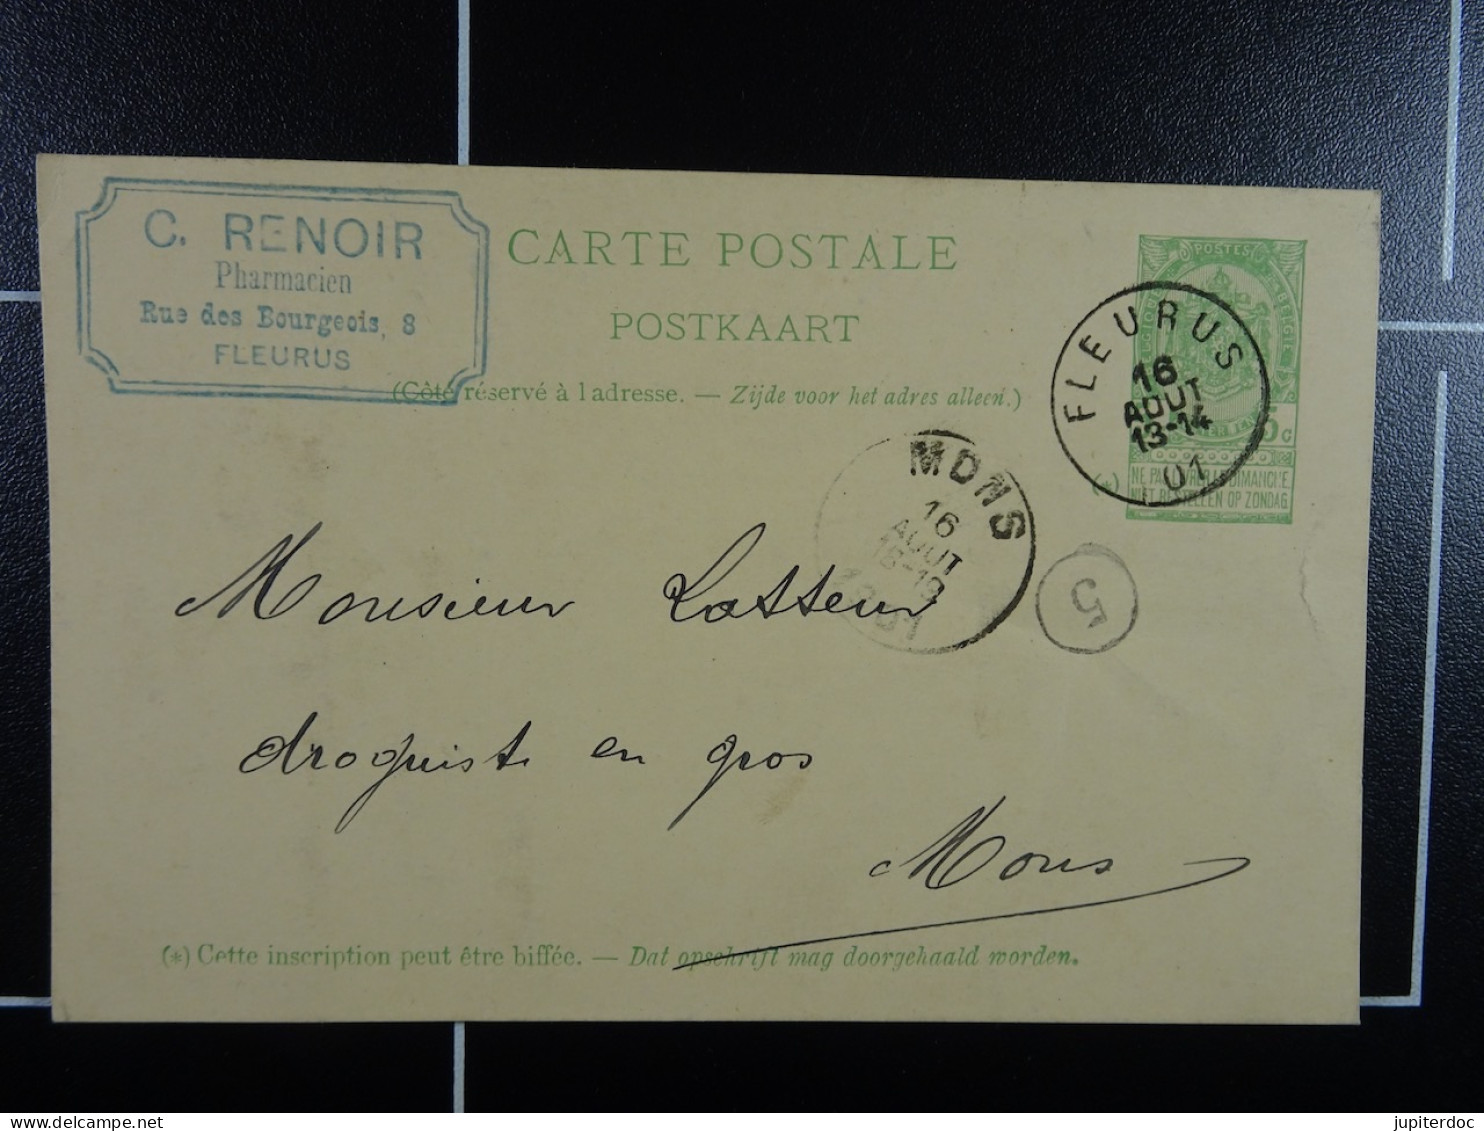 C. Renoir Pharmacien Fleurus - Marchands